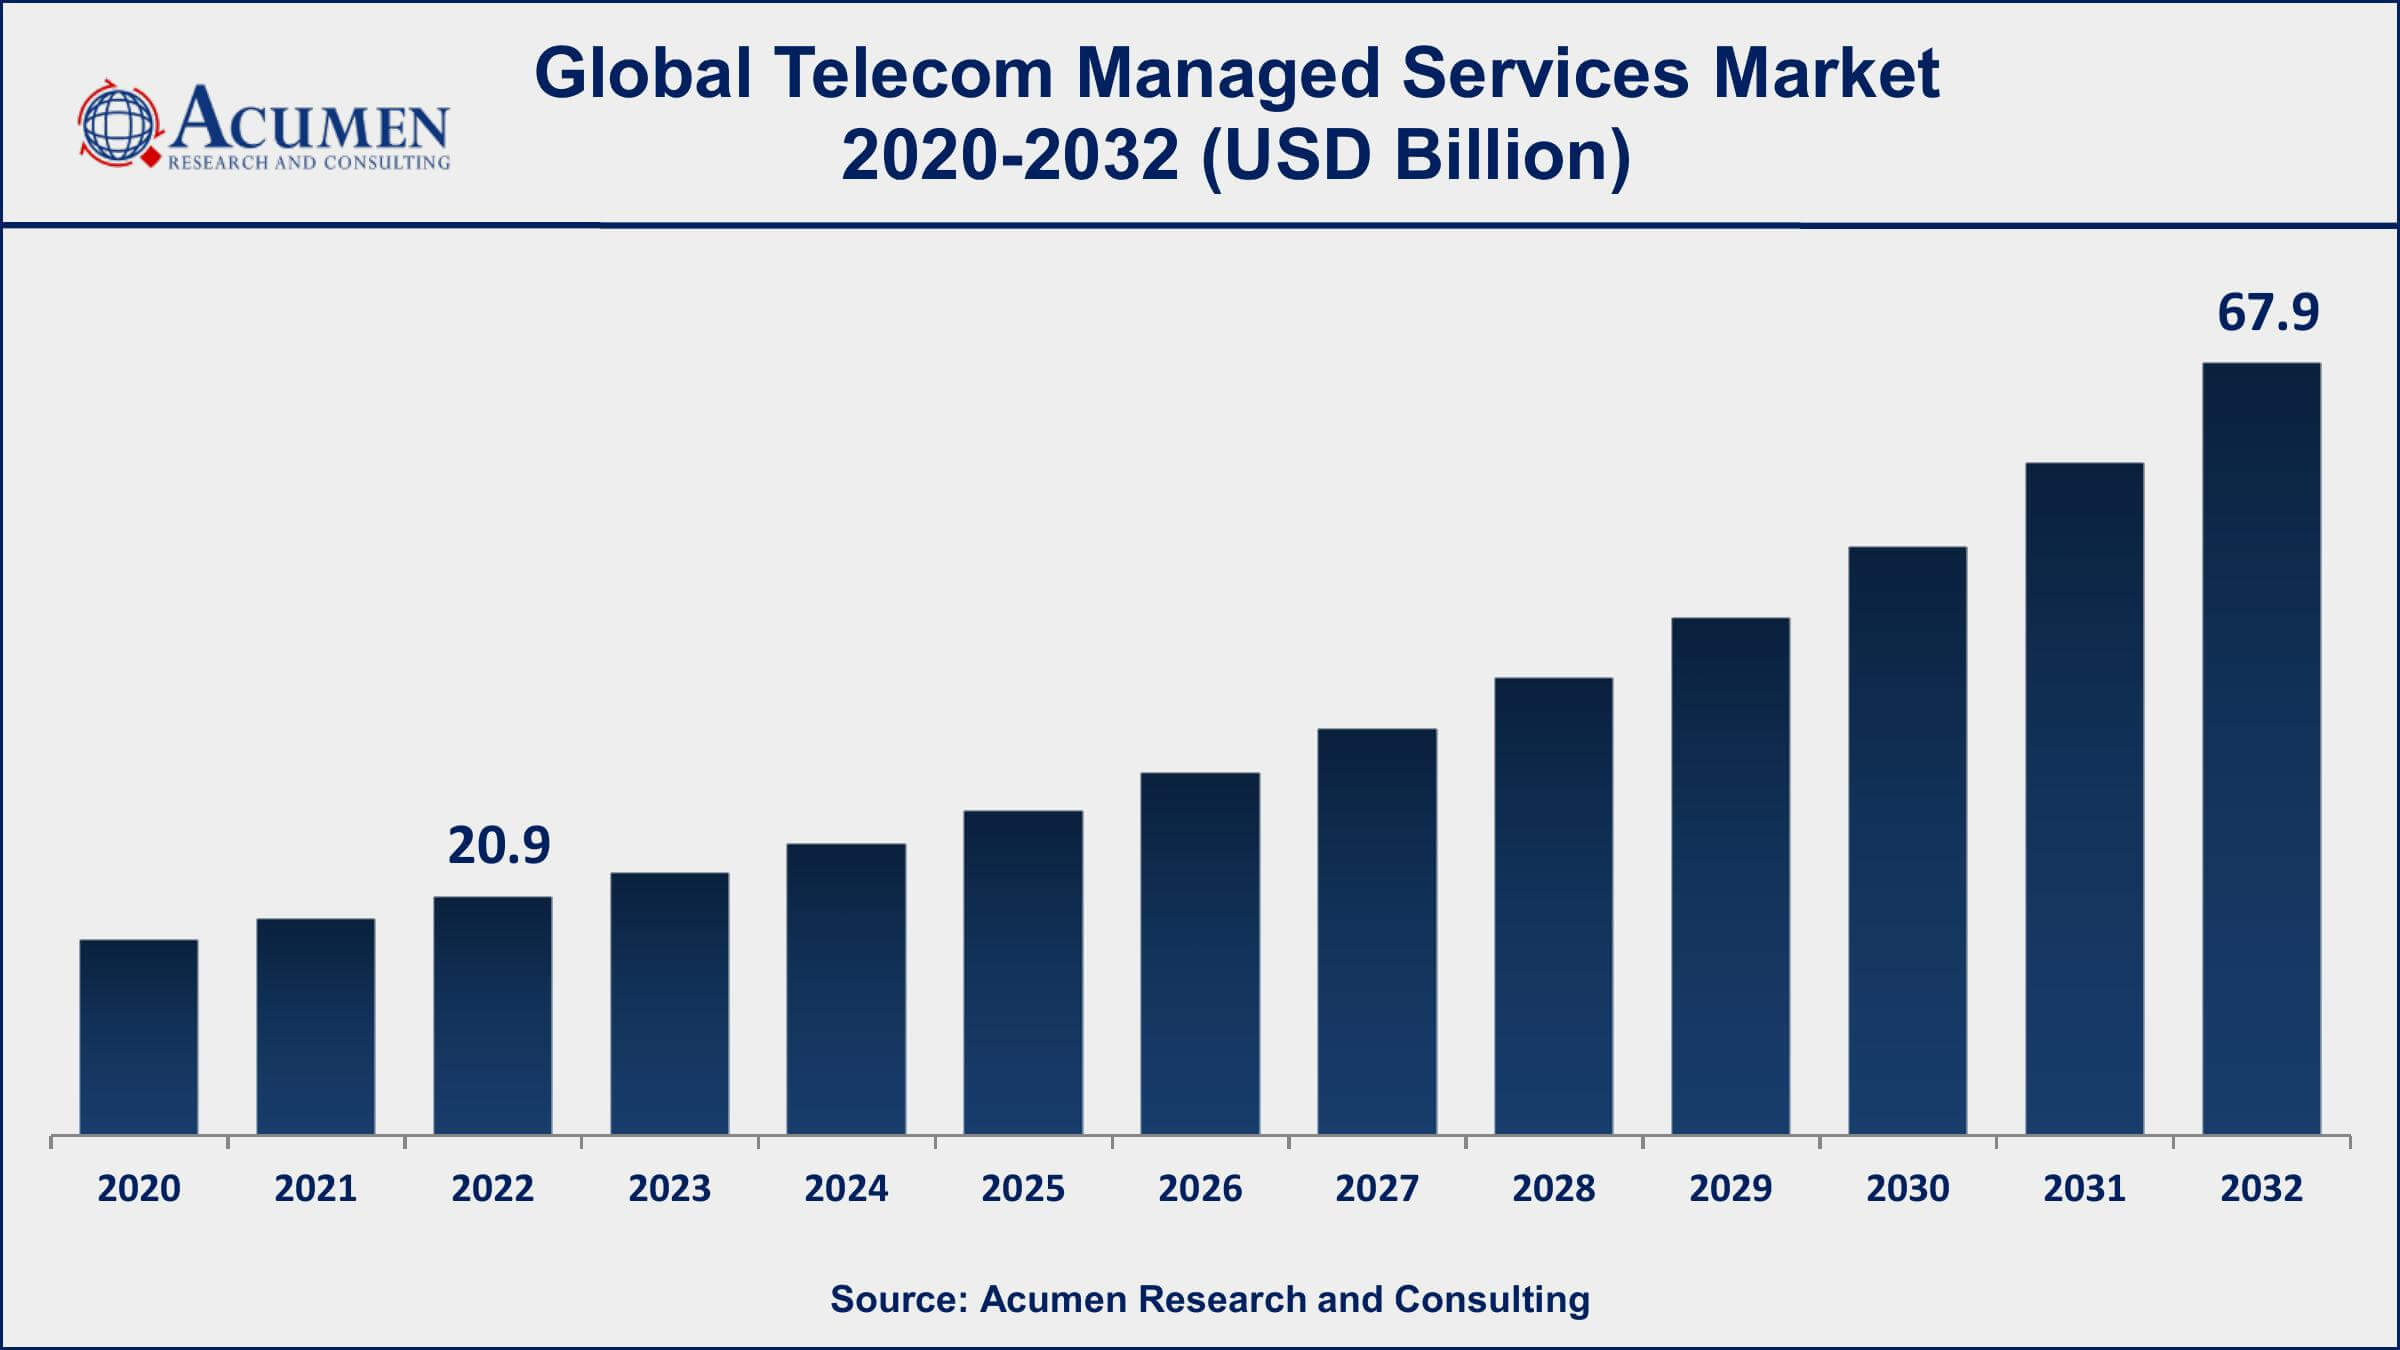 Telecom Managed Services Market Drivers